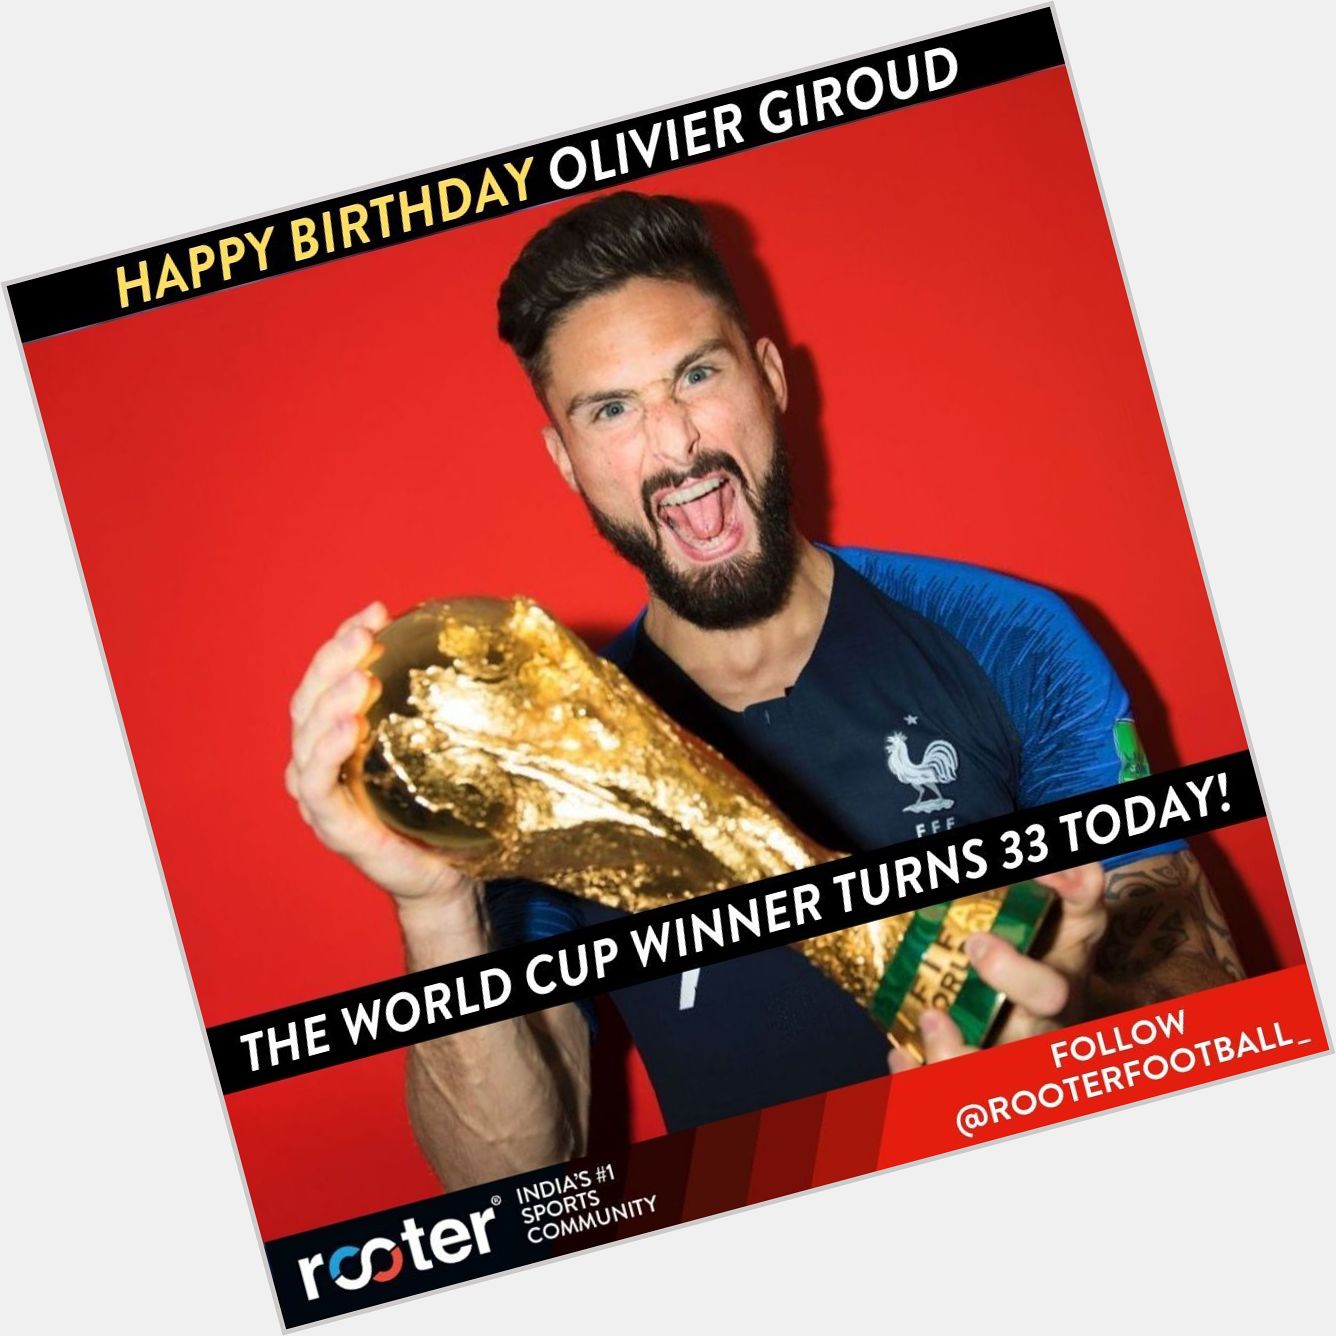 Happy Birthday, Olivier Giroud! 